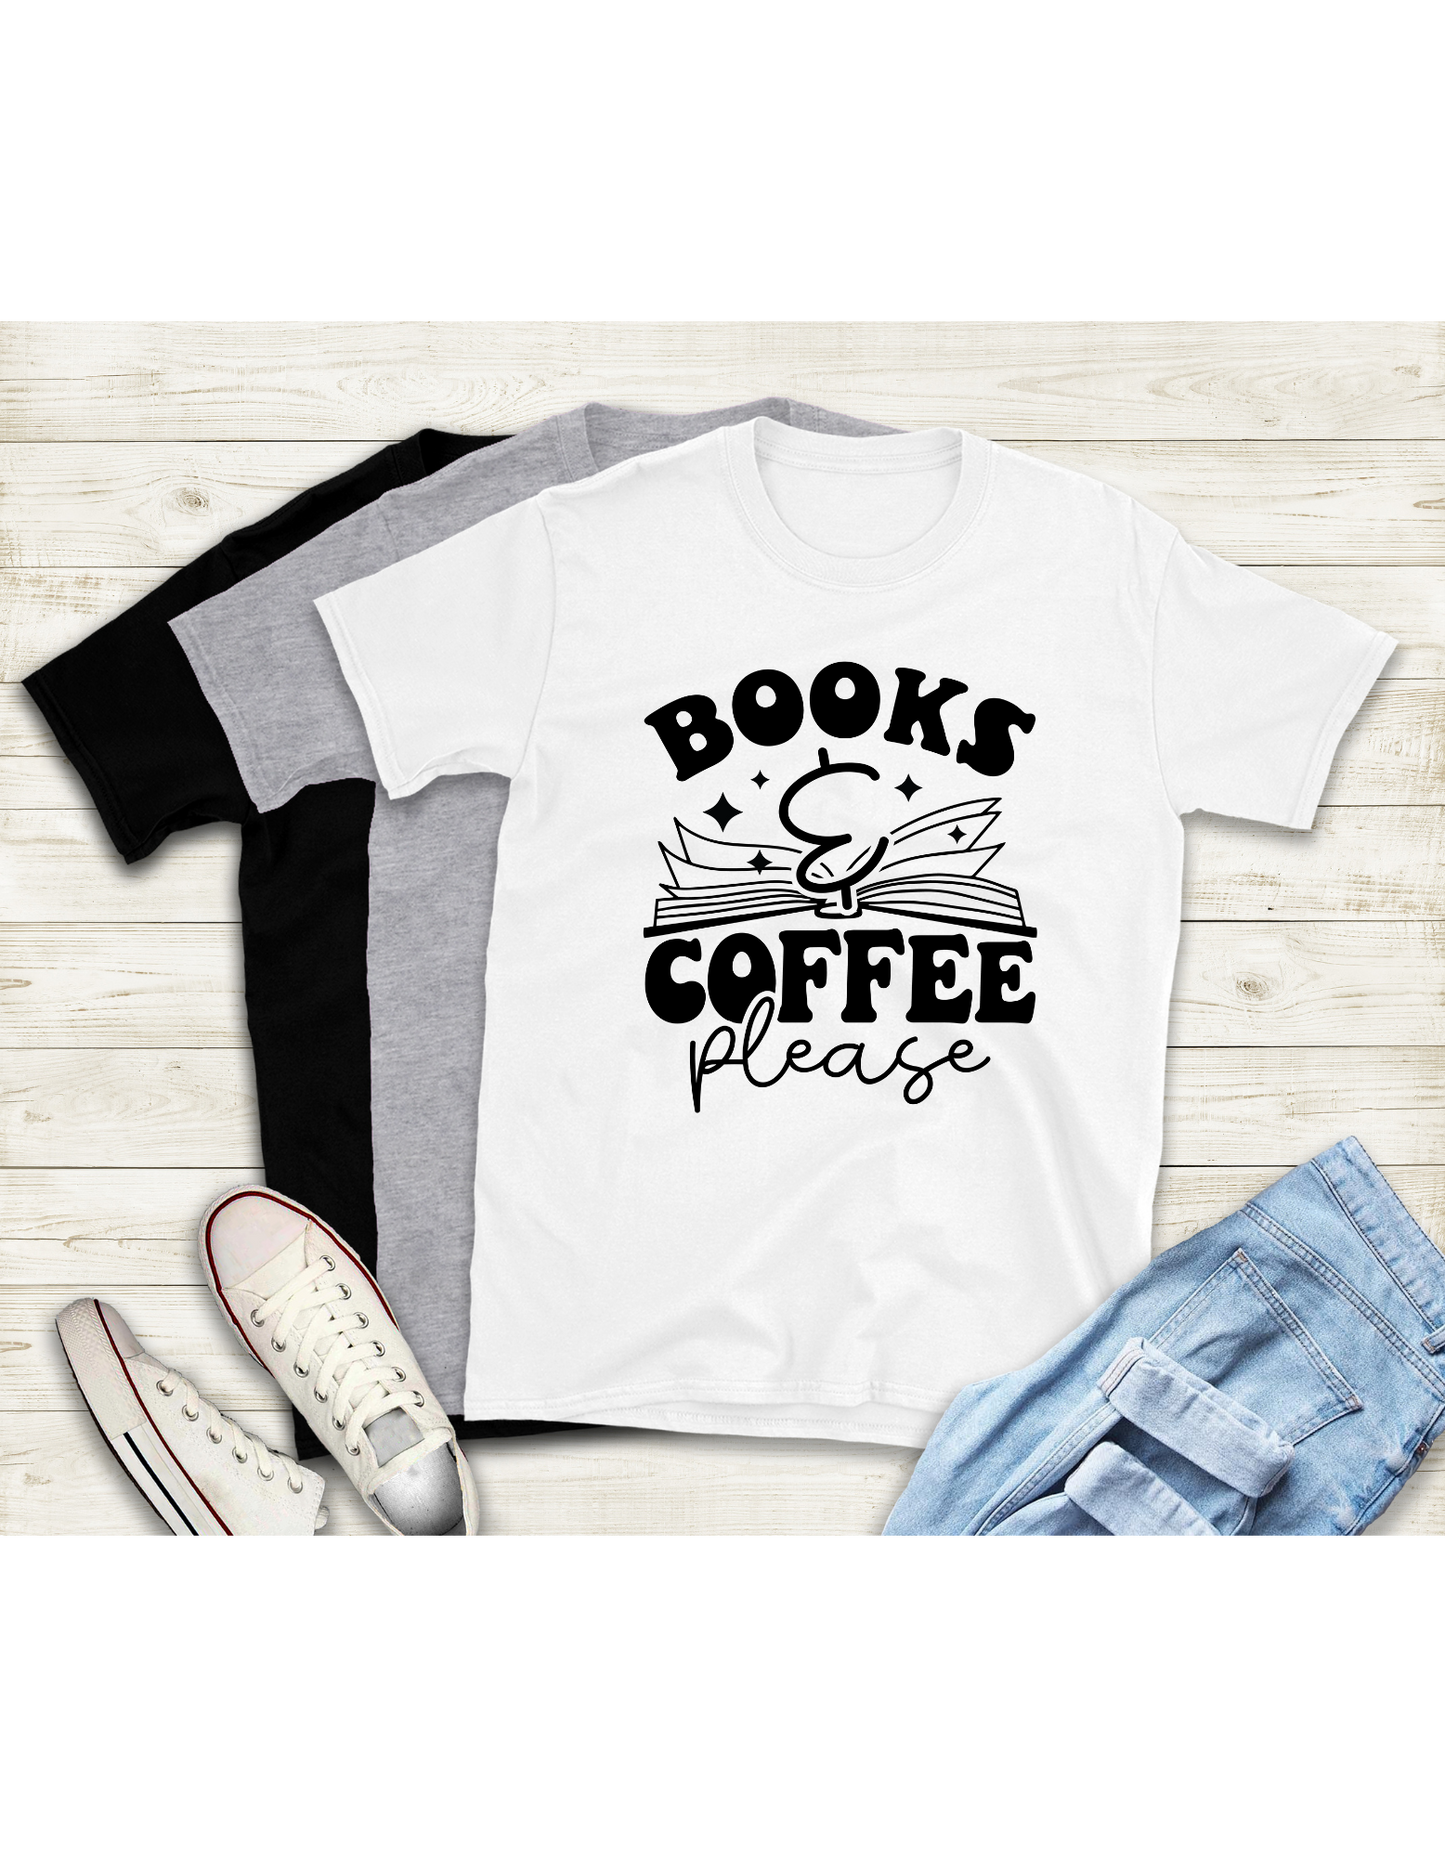 Books & Coffee Please